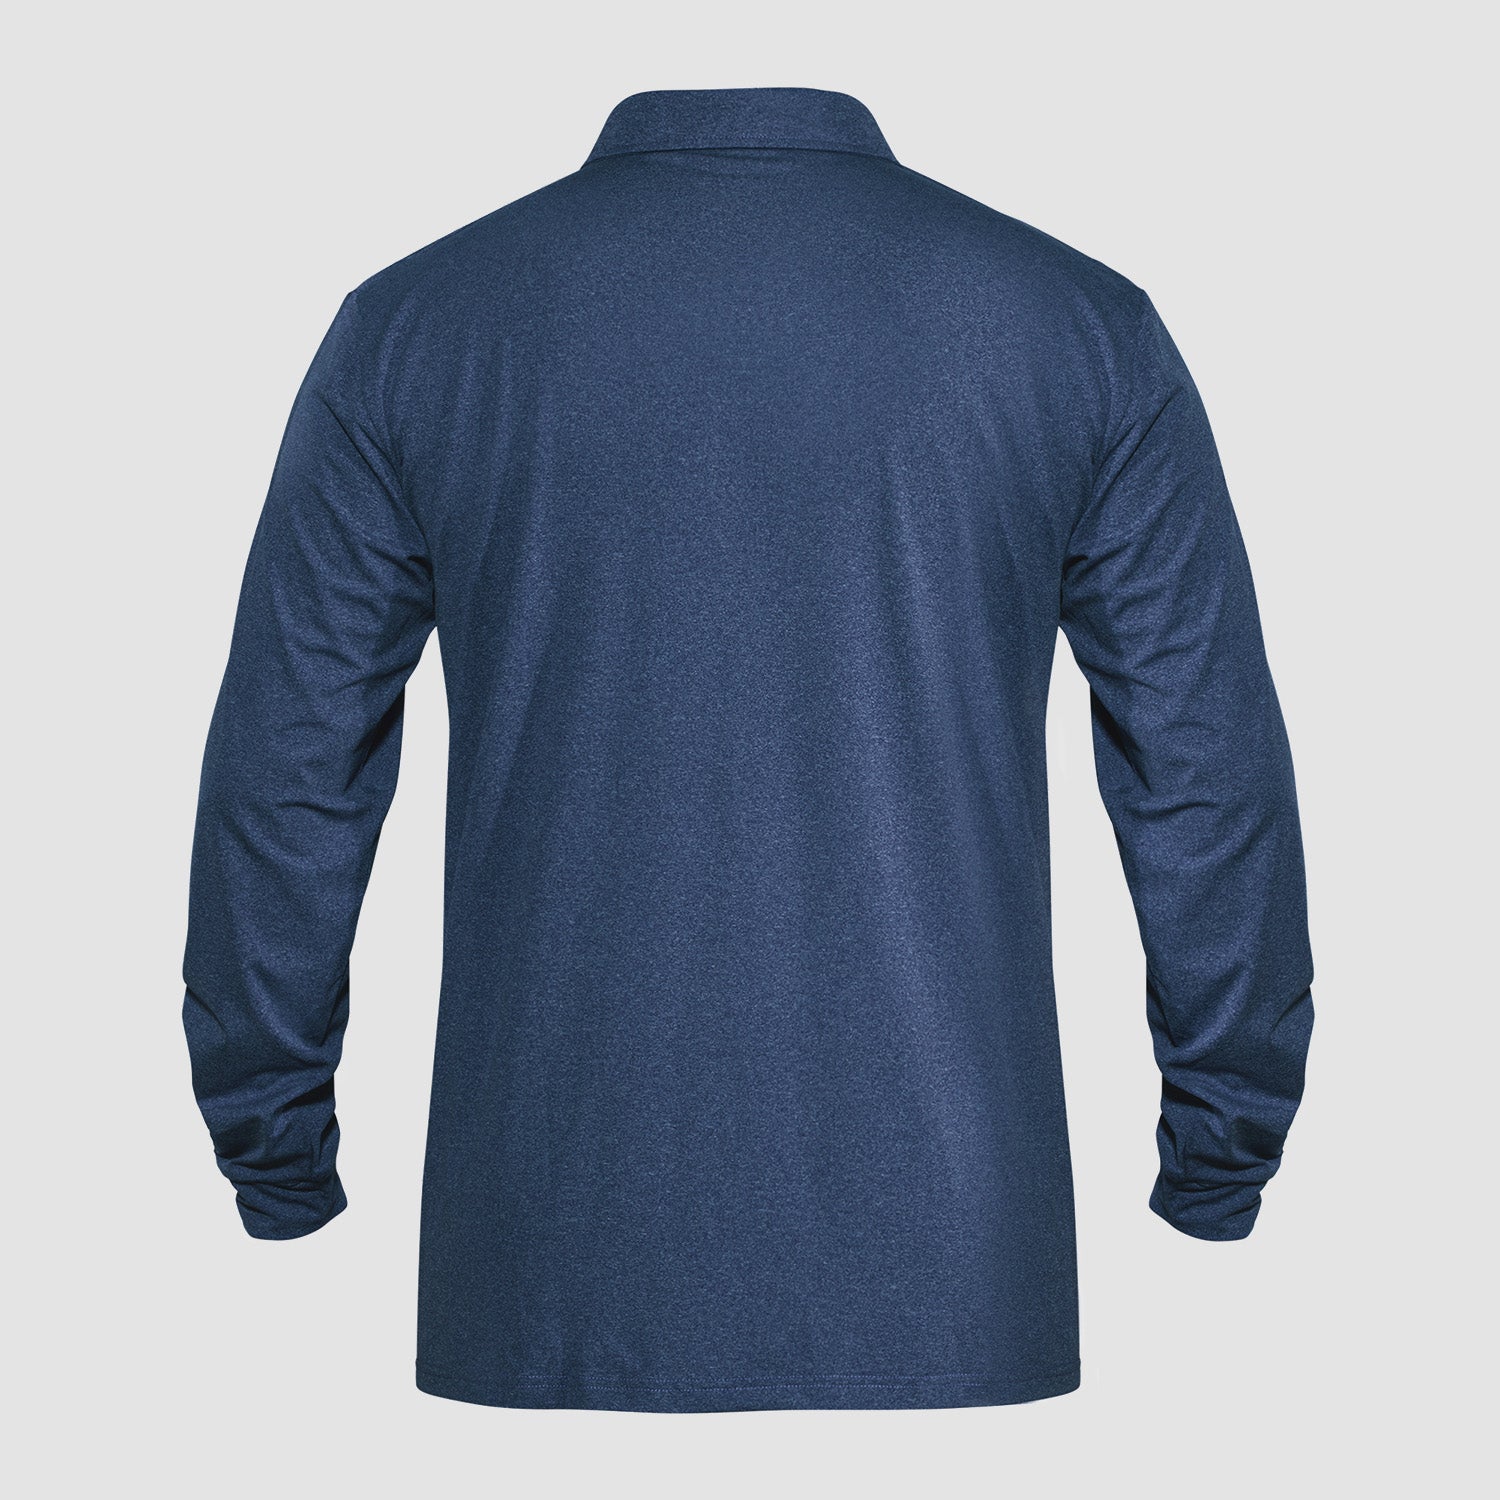 Men's Long Sleeve Hiking Shirts Fishing Button Down Lightweight Shirt Quick  Dry Outdoor Basic Sports Shirt